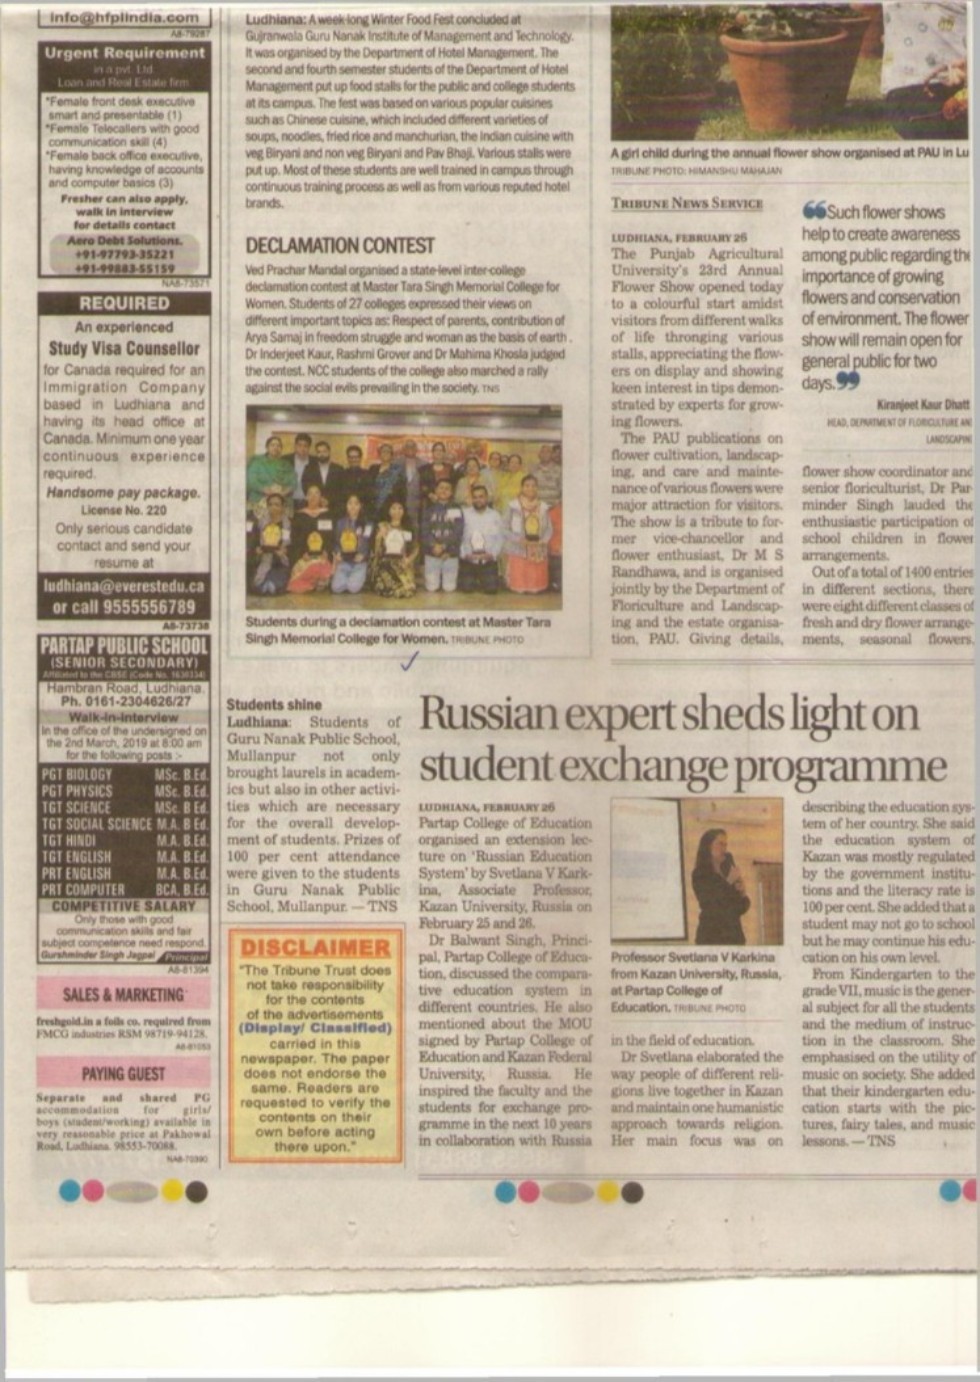 Kazan University Professor visited International Conference in India